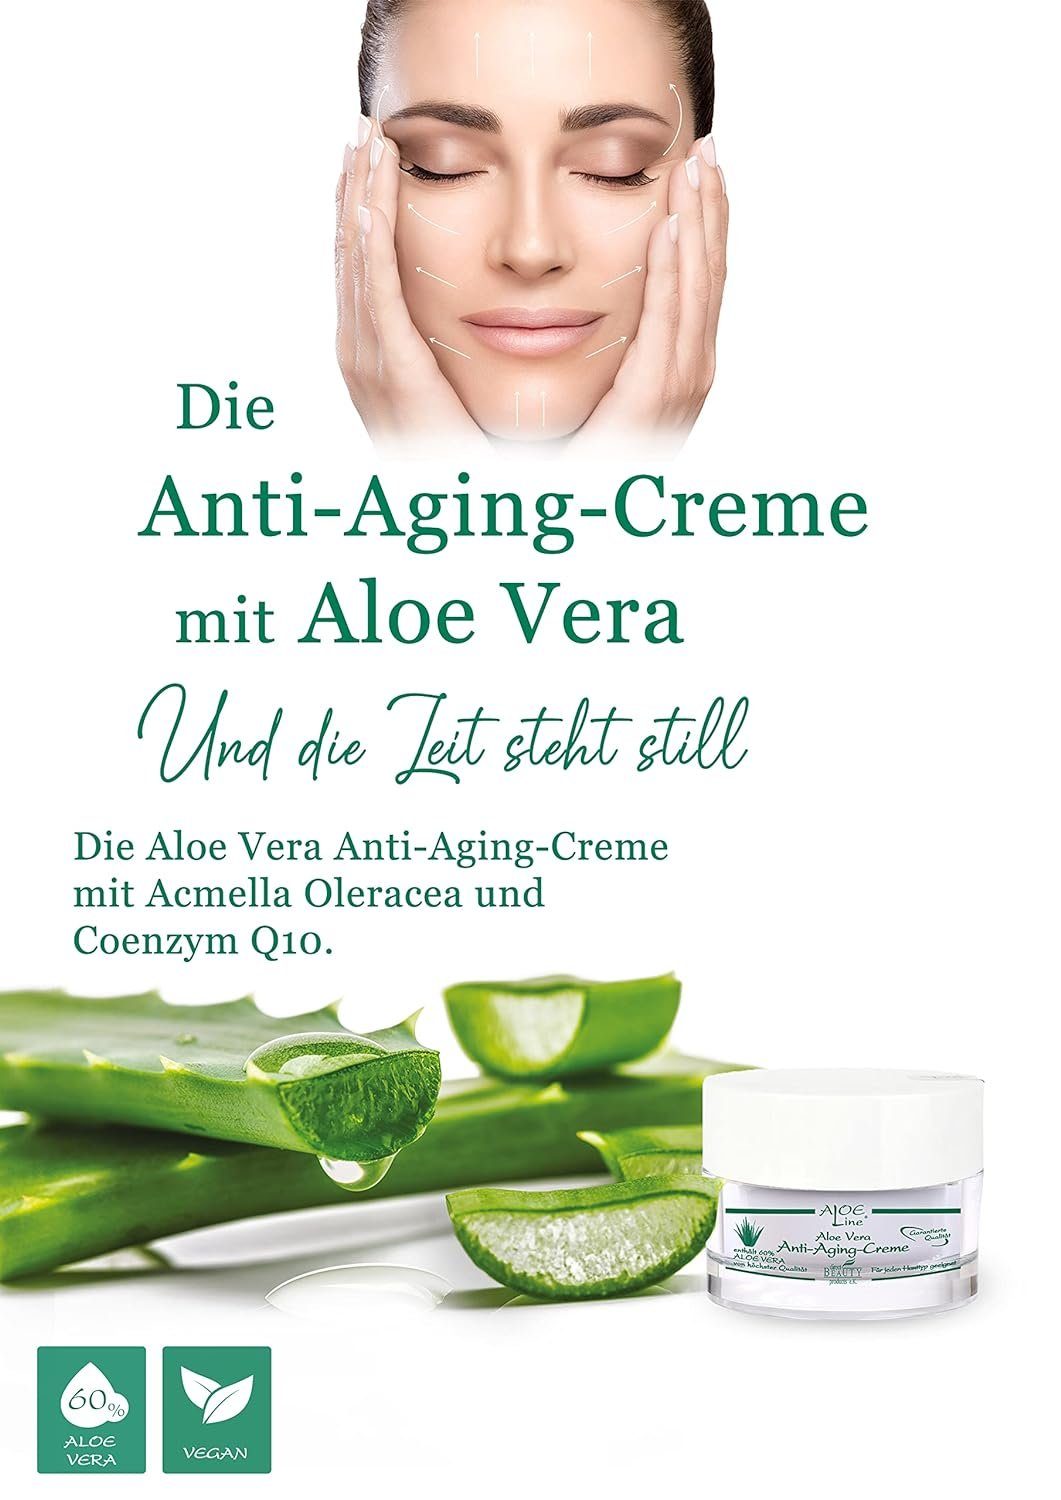 ALOE Line Anti-Aging-Creme Aloe Vera 60% Aging Bio 24h mit 50ml Gesichtscreme Aloe Anti Vera